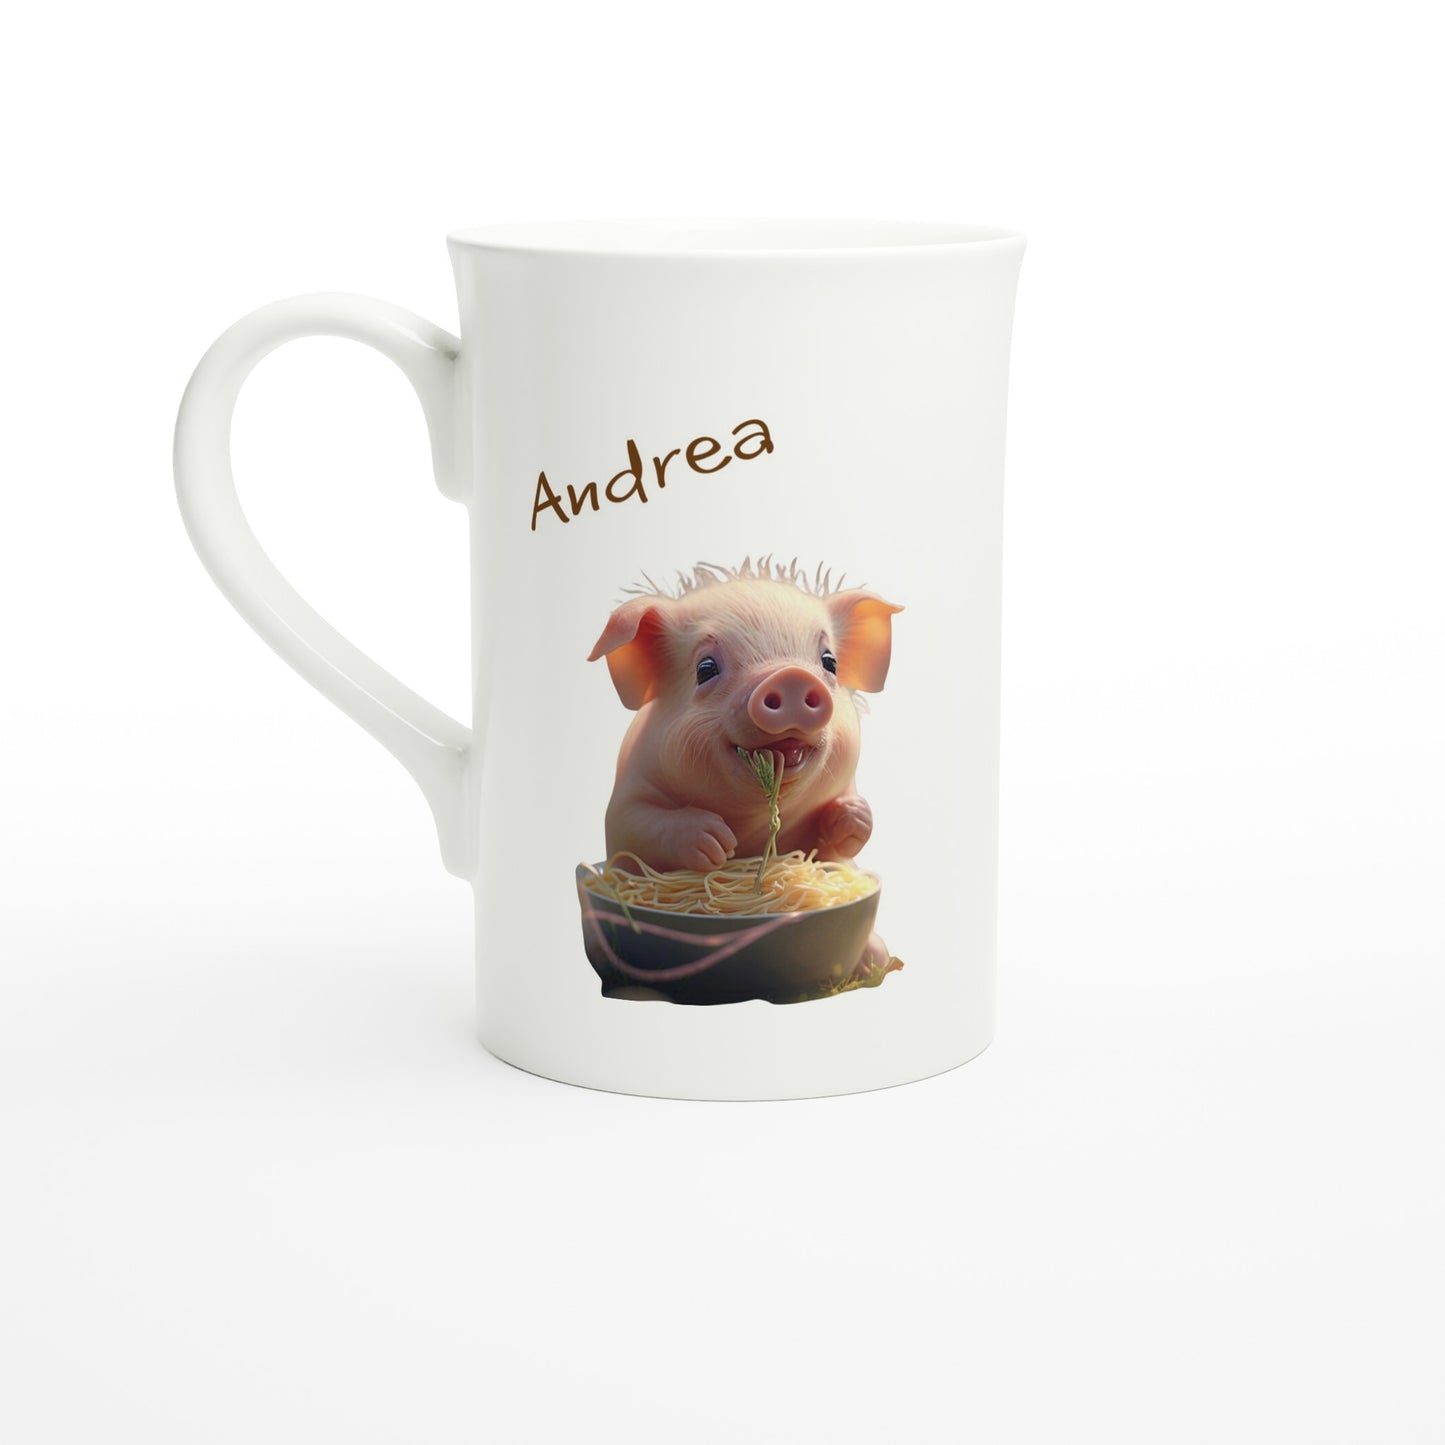 Personalised porcelain pig mug